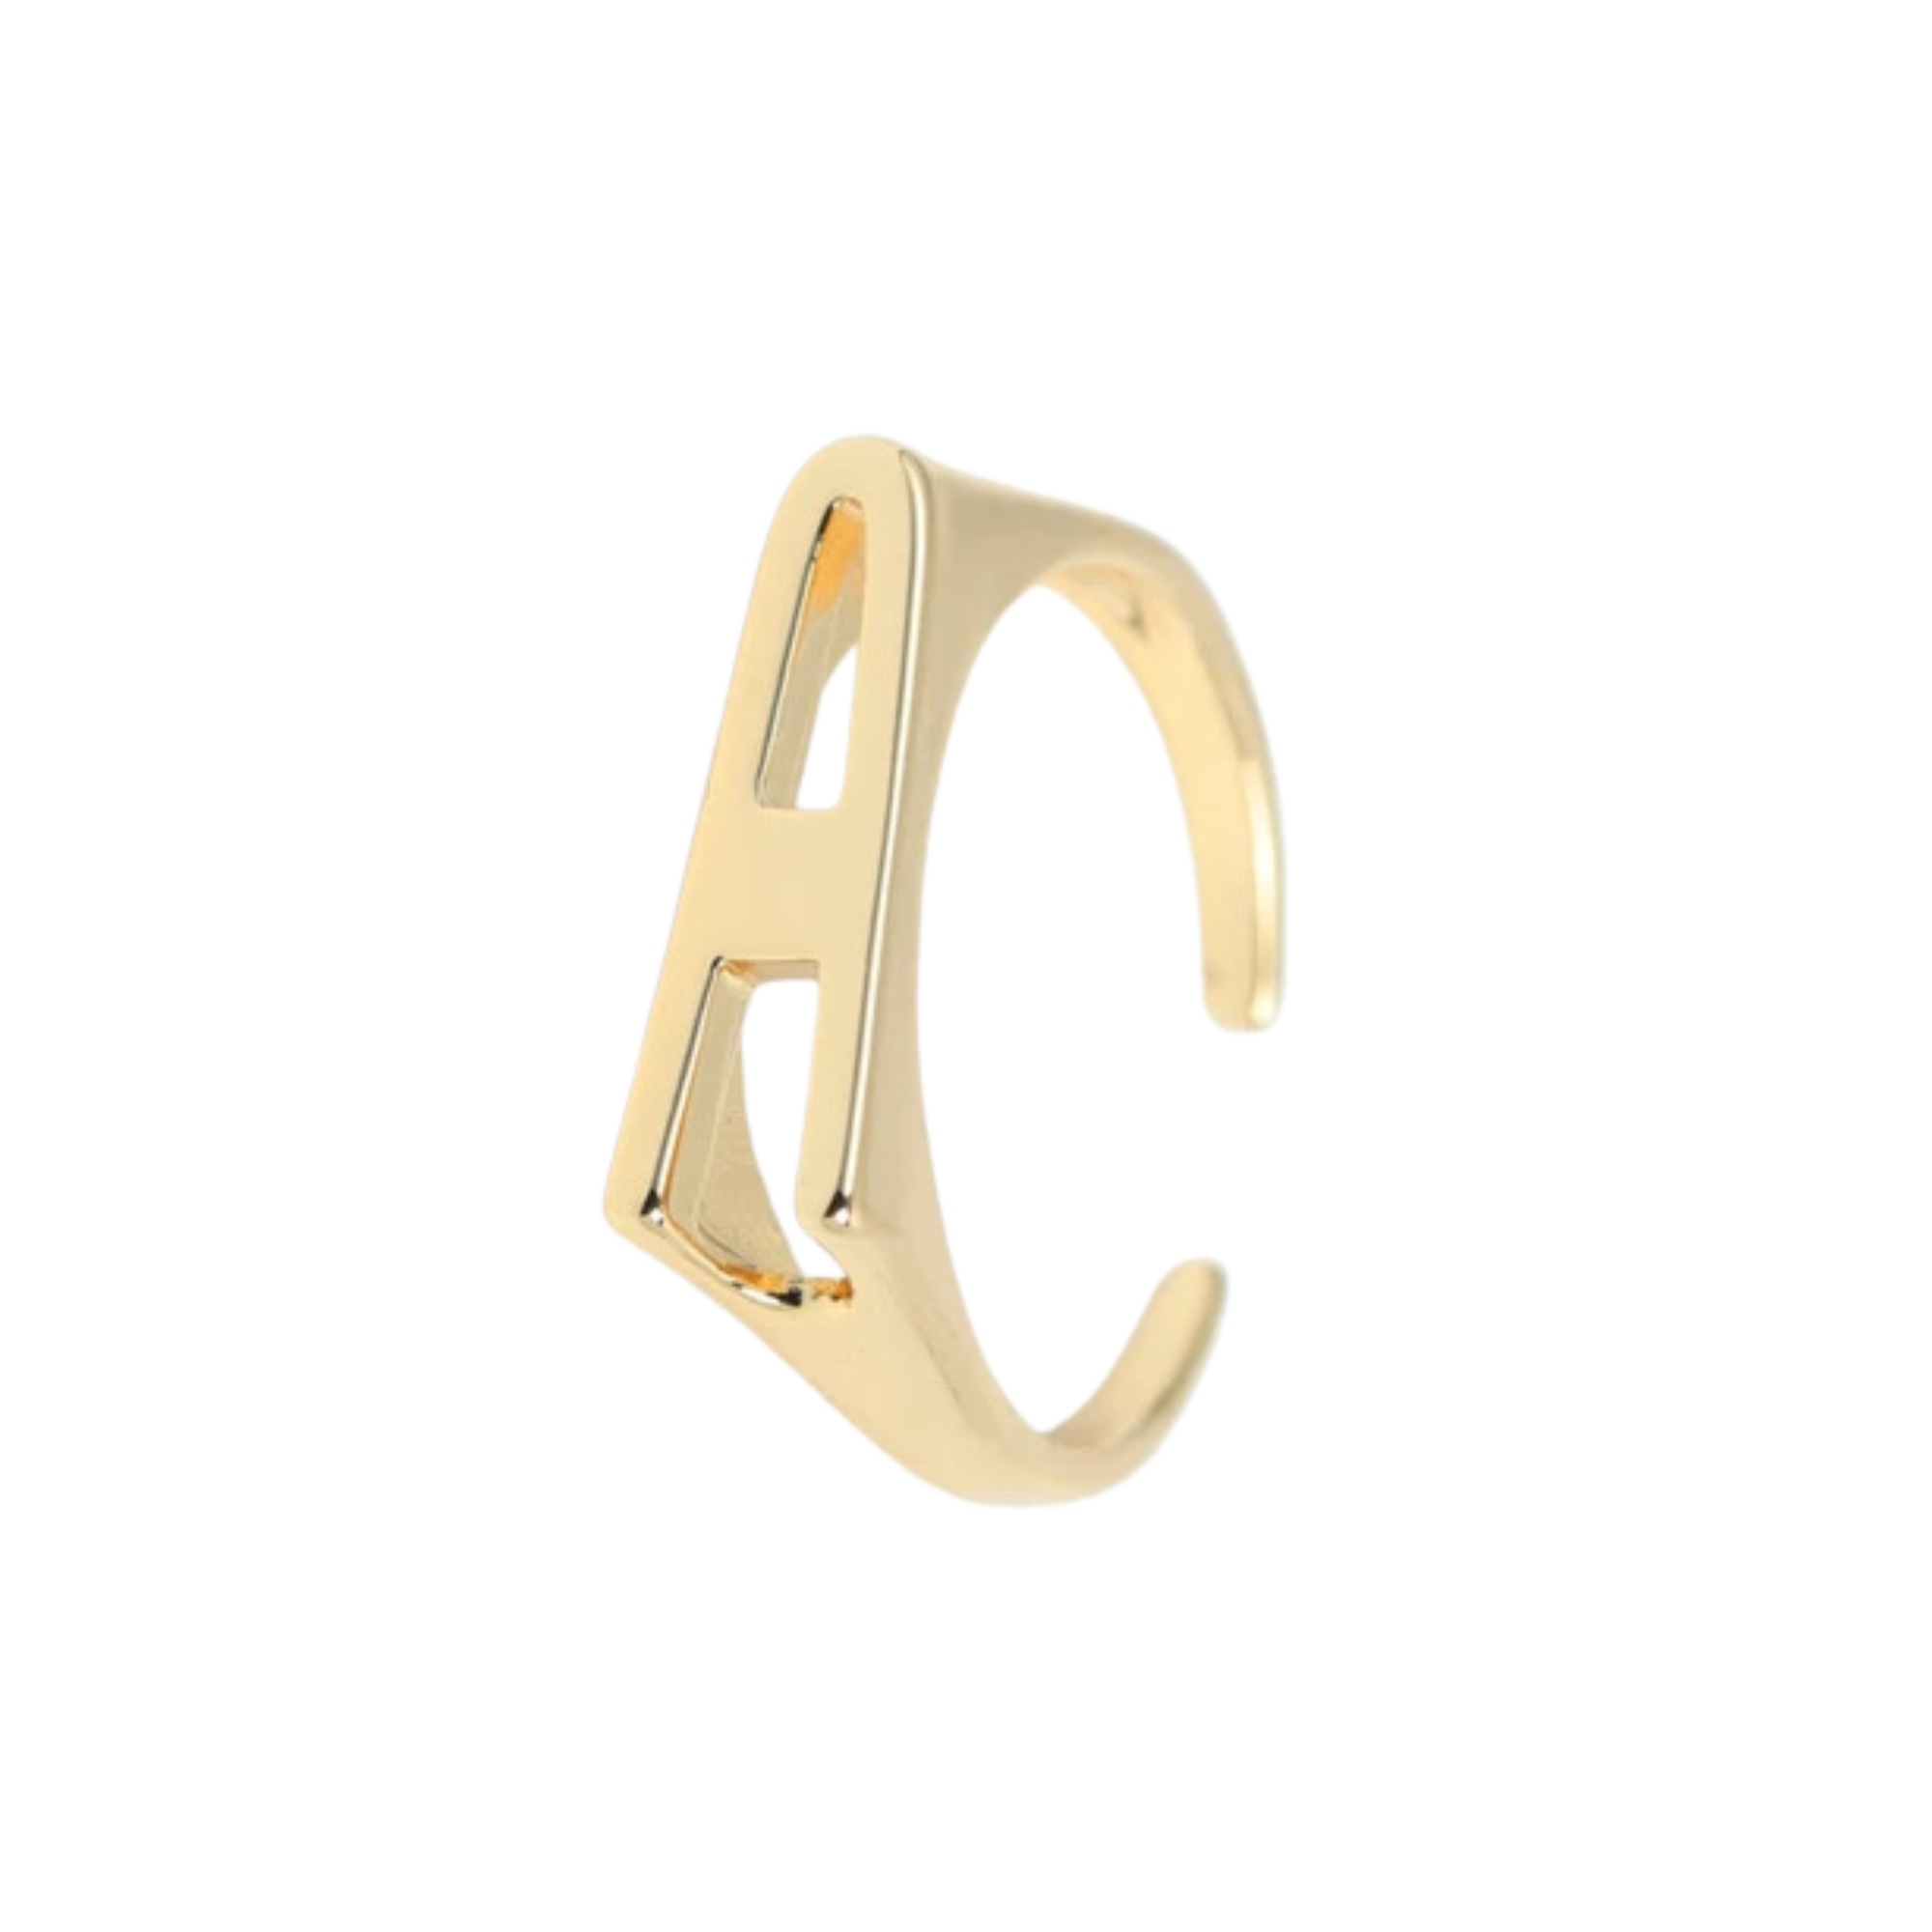 Alphabet Adjustable Copper Rings - Pre Order: Ships Feb 29